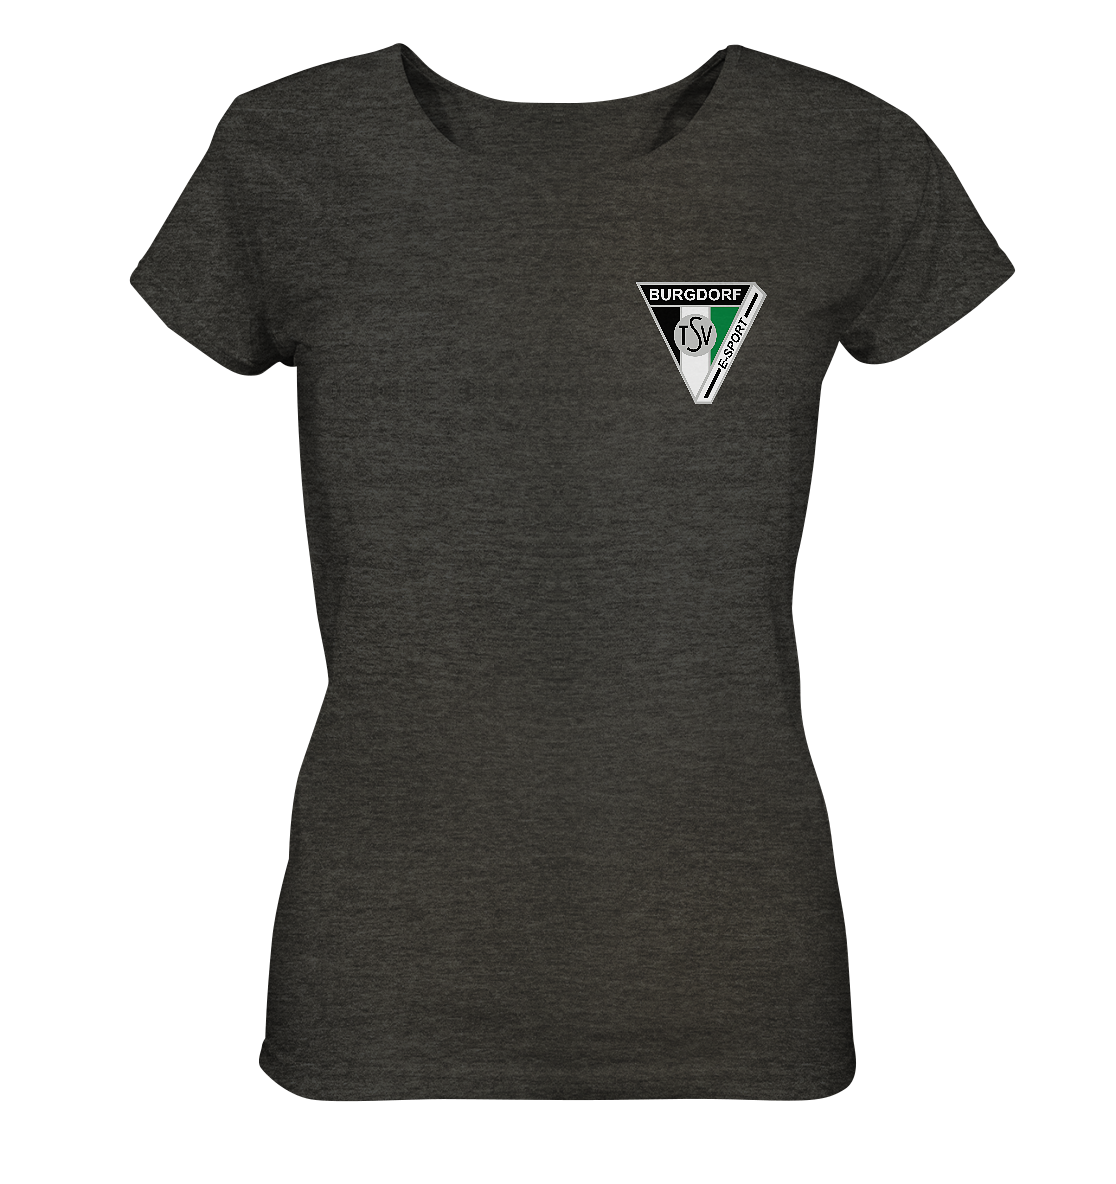 TSV Burgdorf - E-Sport - Ladies Basic Shirt